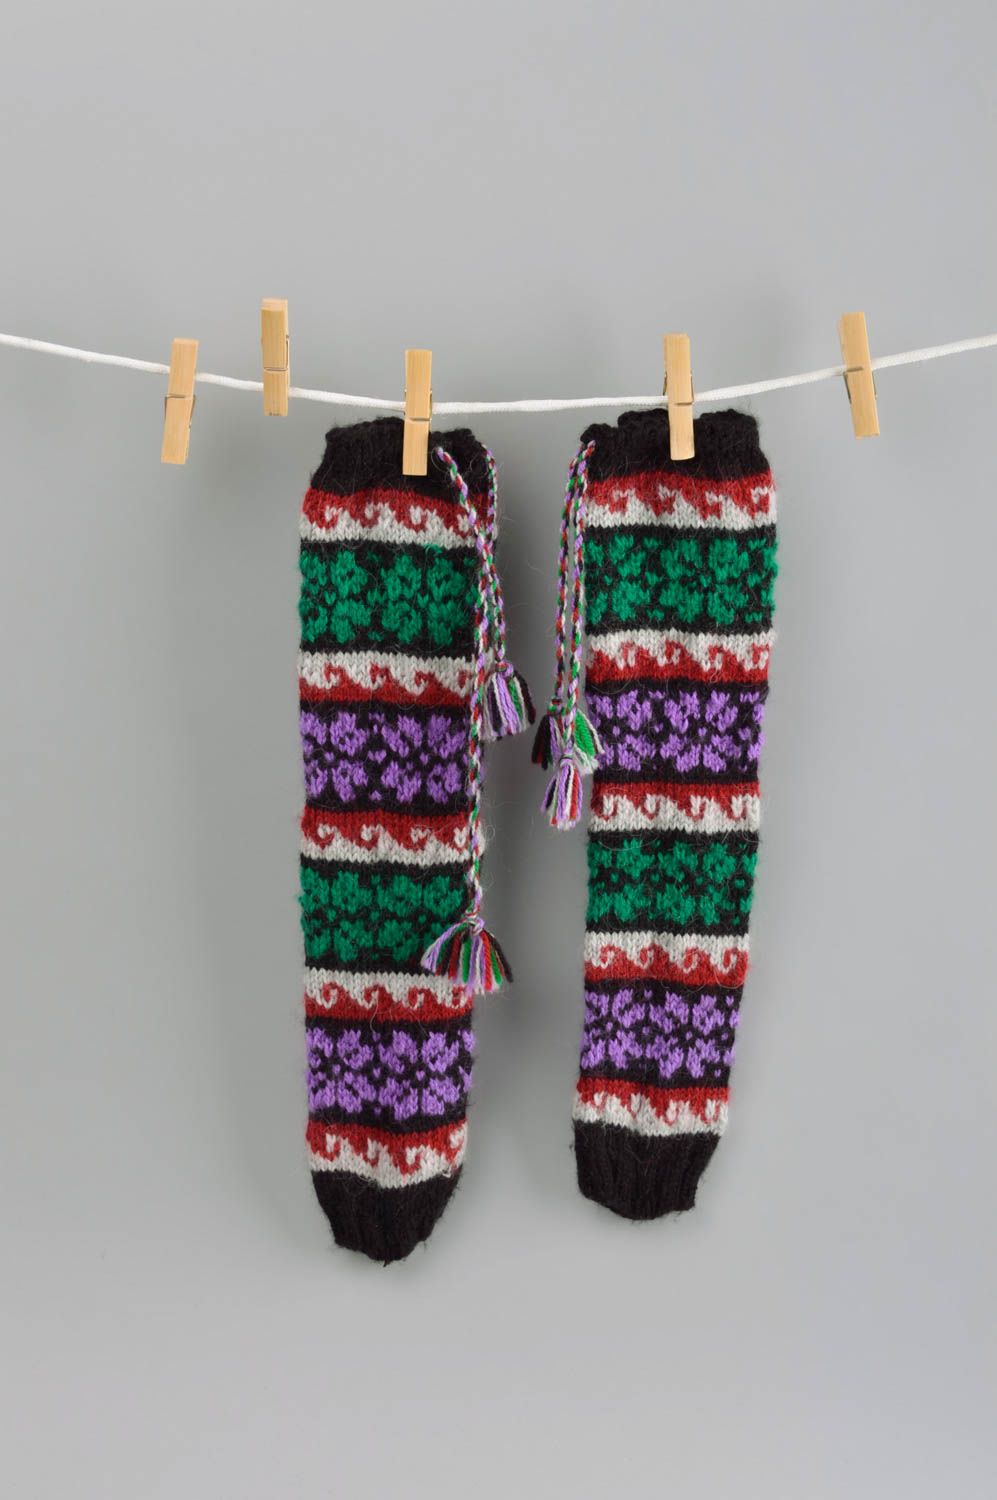 Handmade woolen socks warm patterned socks unusual winter accessories photo 1